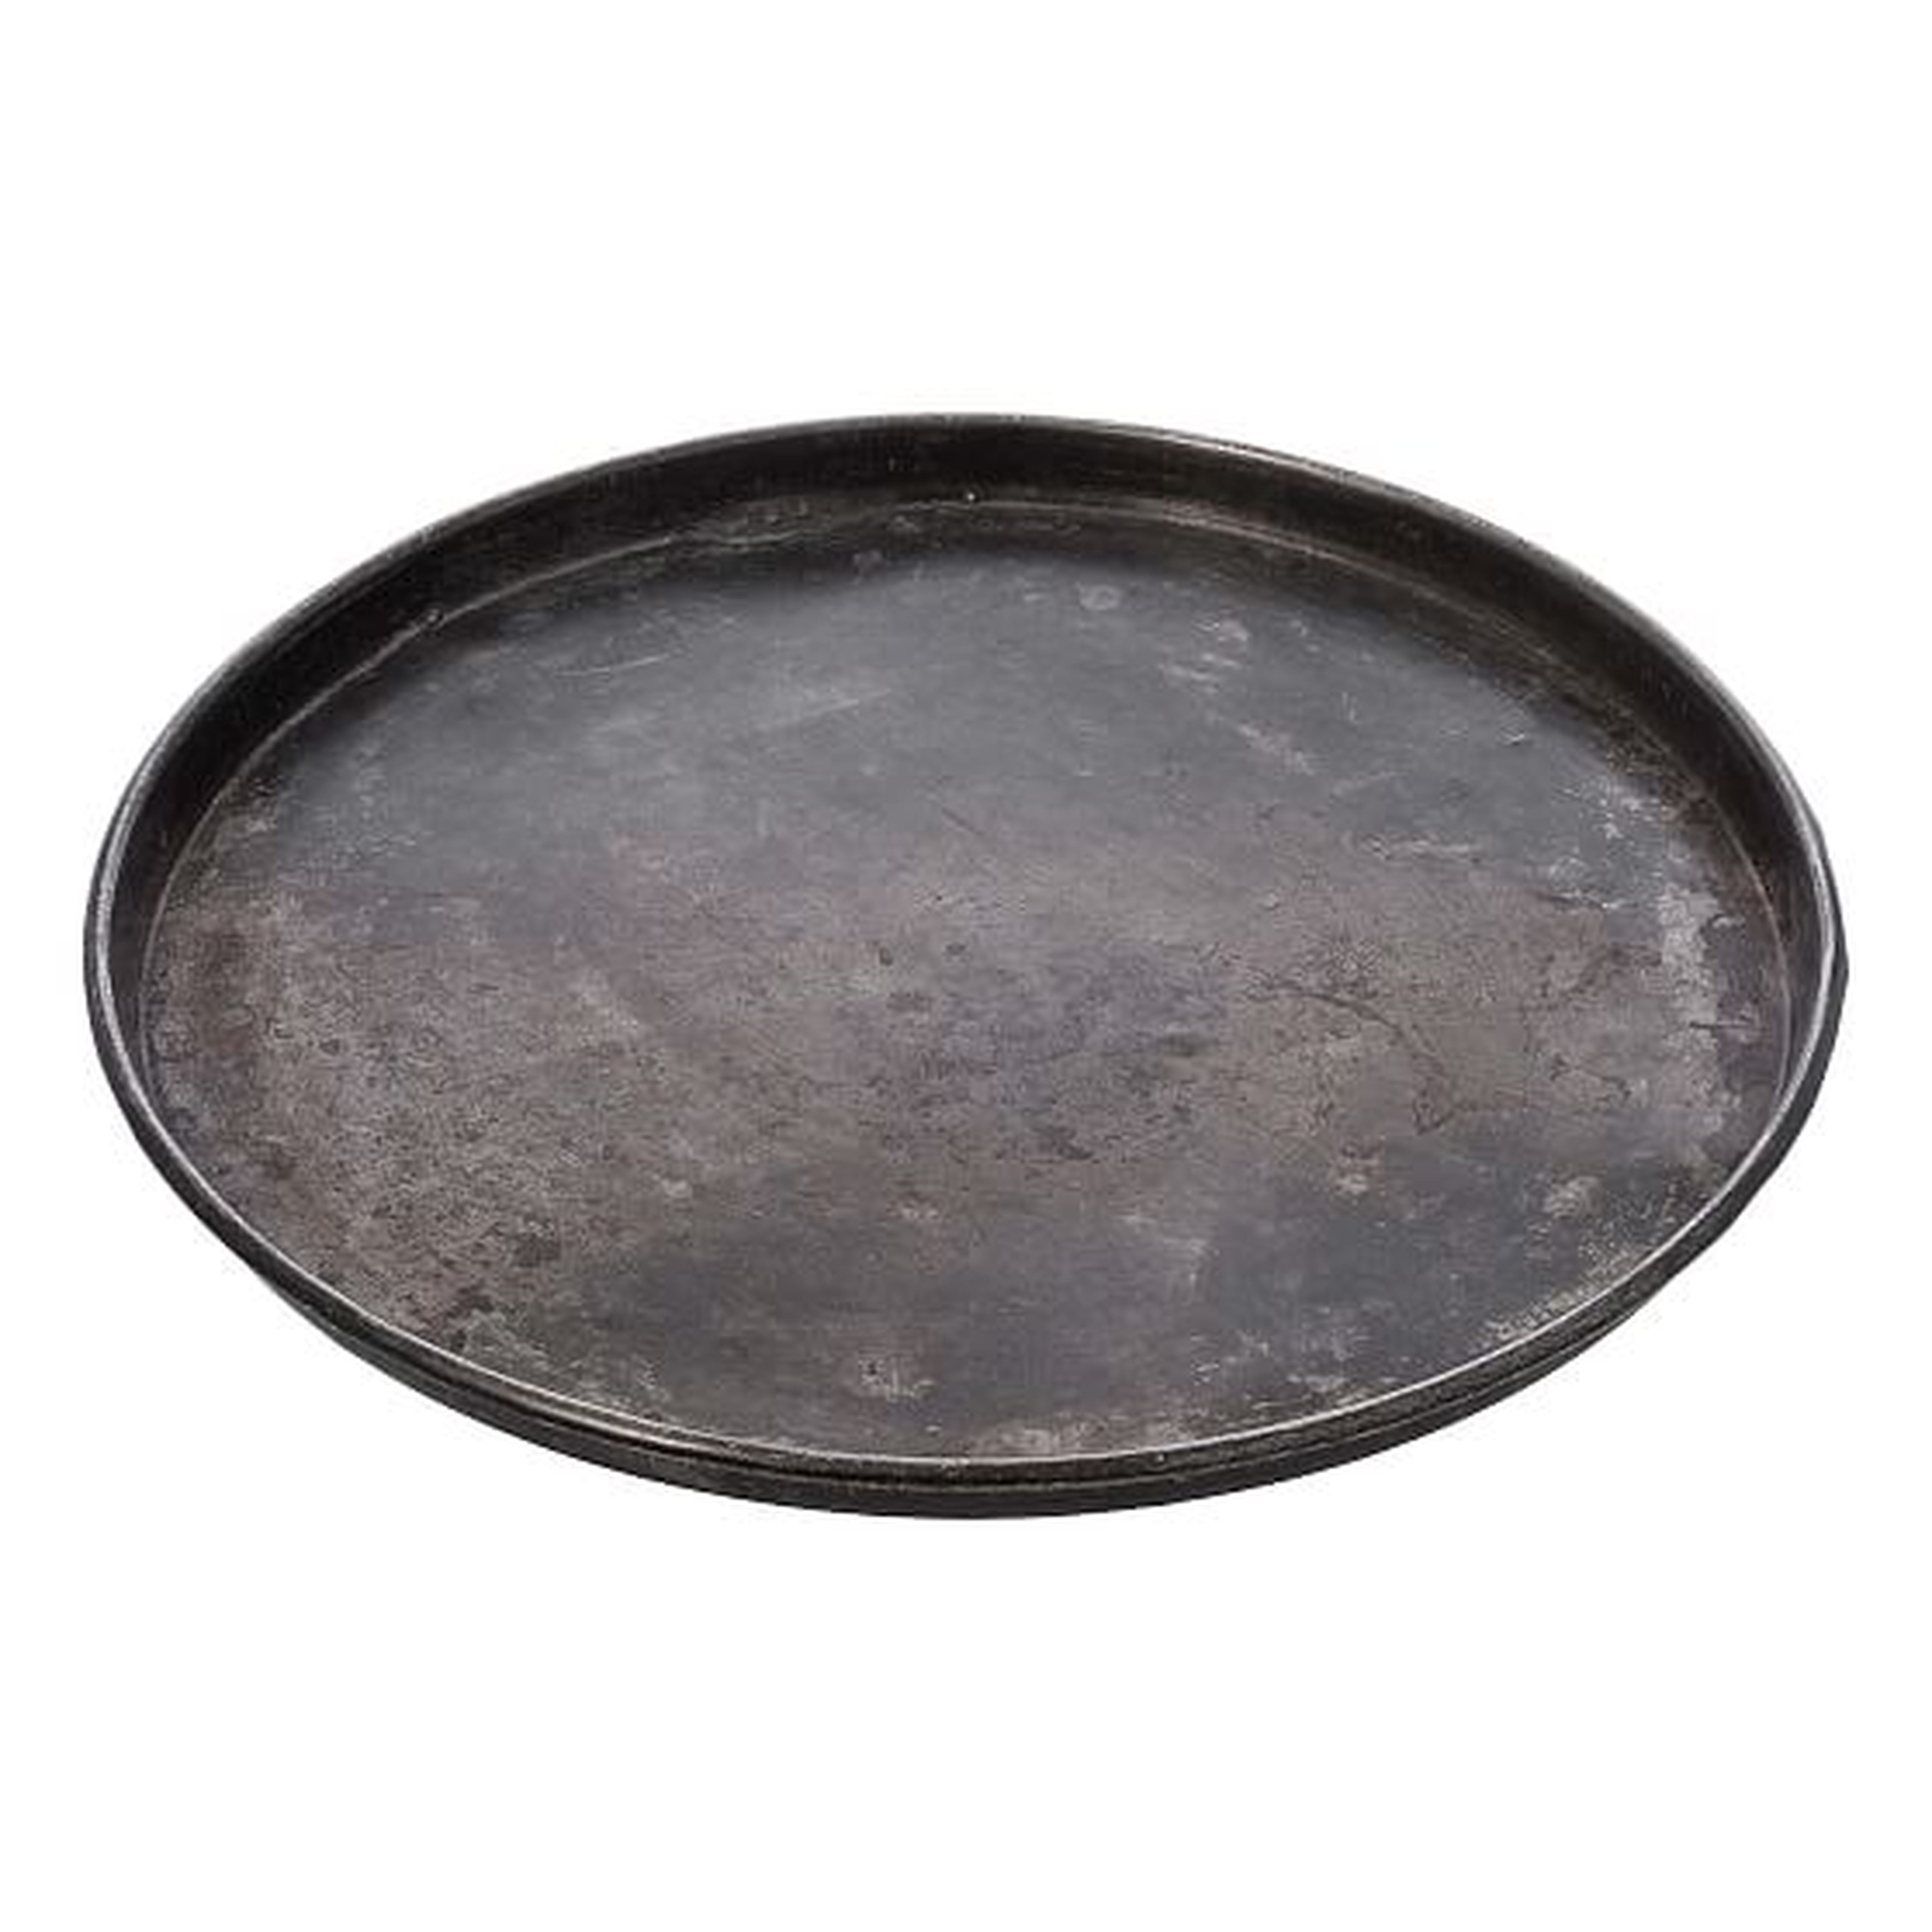 Vintage Large Round Tray, Silver, Steel - West Elm